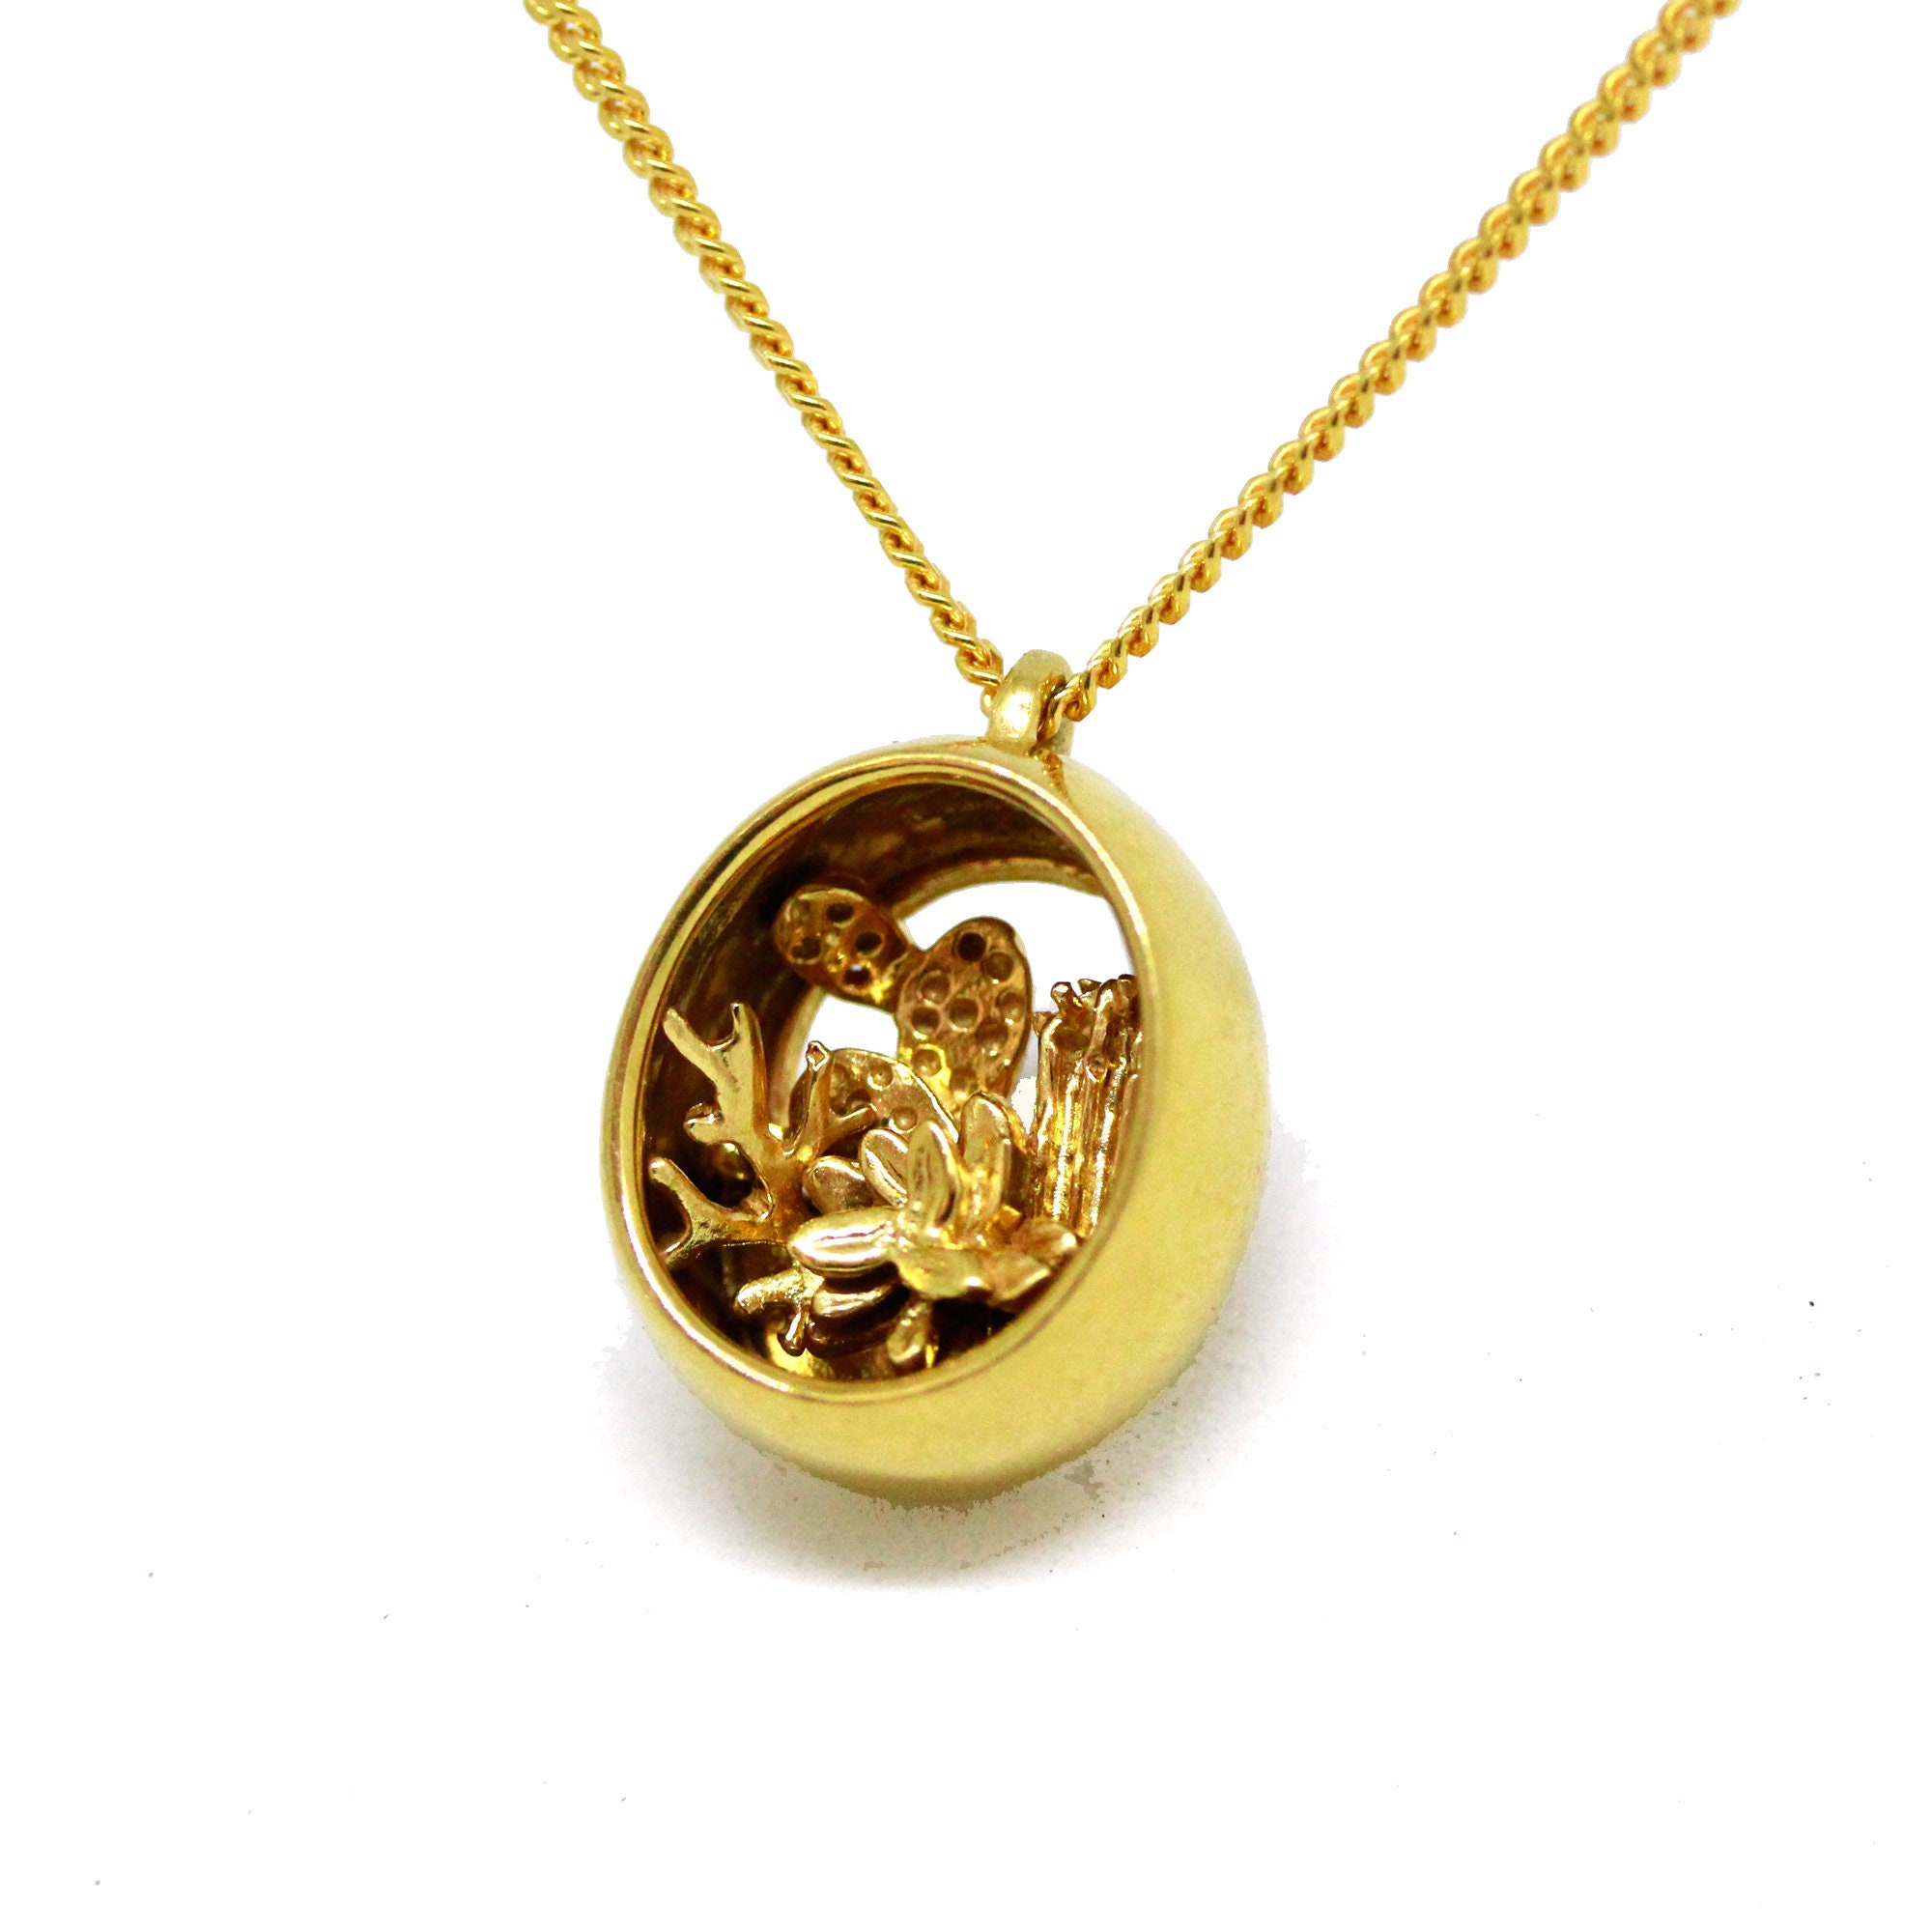 Terrarium Necklace, Unique Gold Necklace, Contemporary Nature Inspired ...